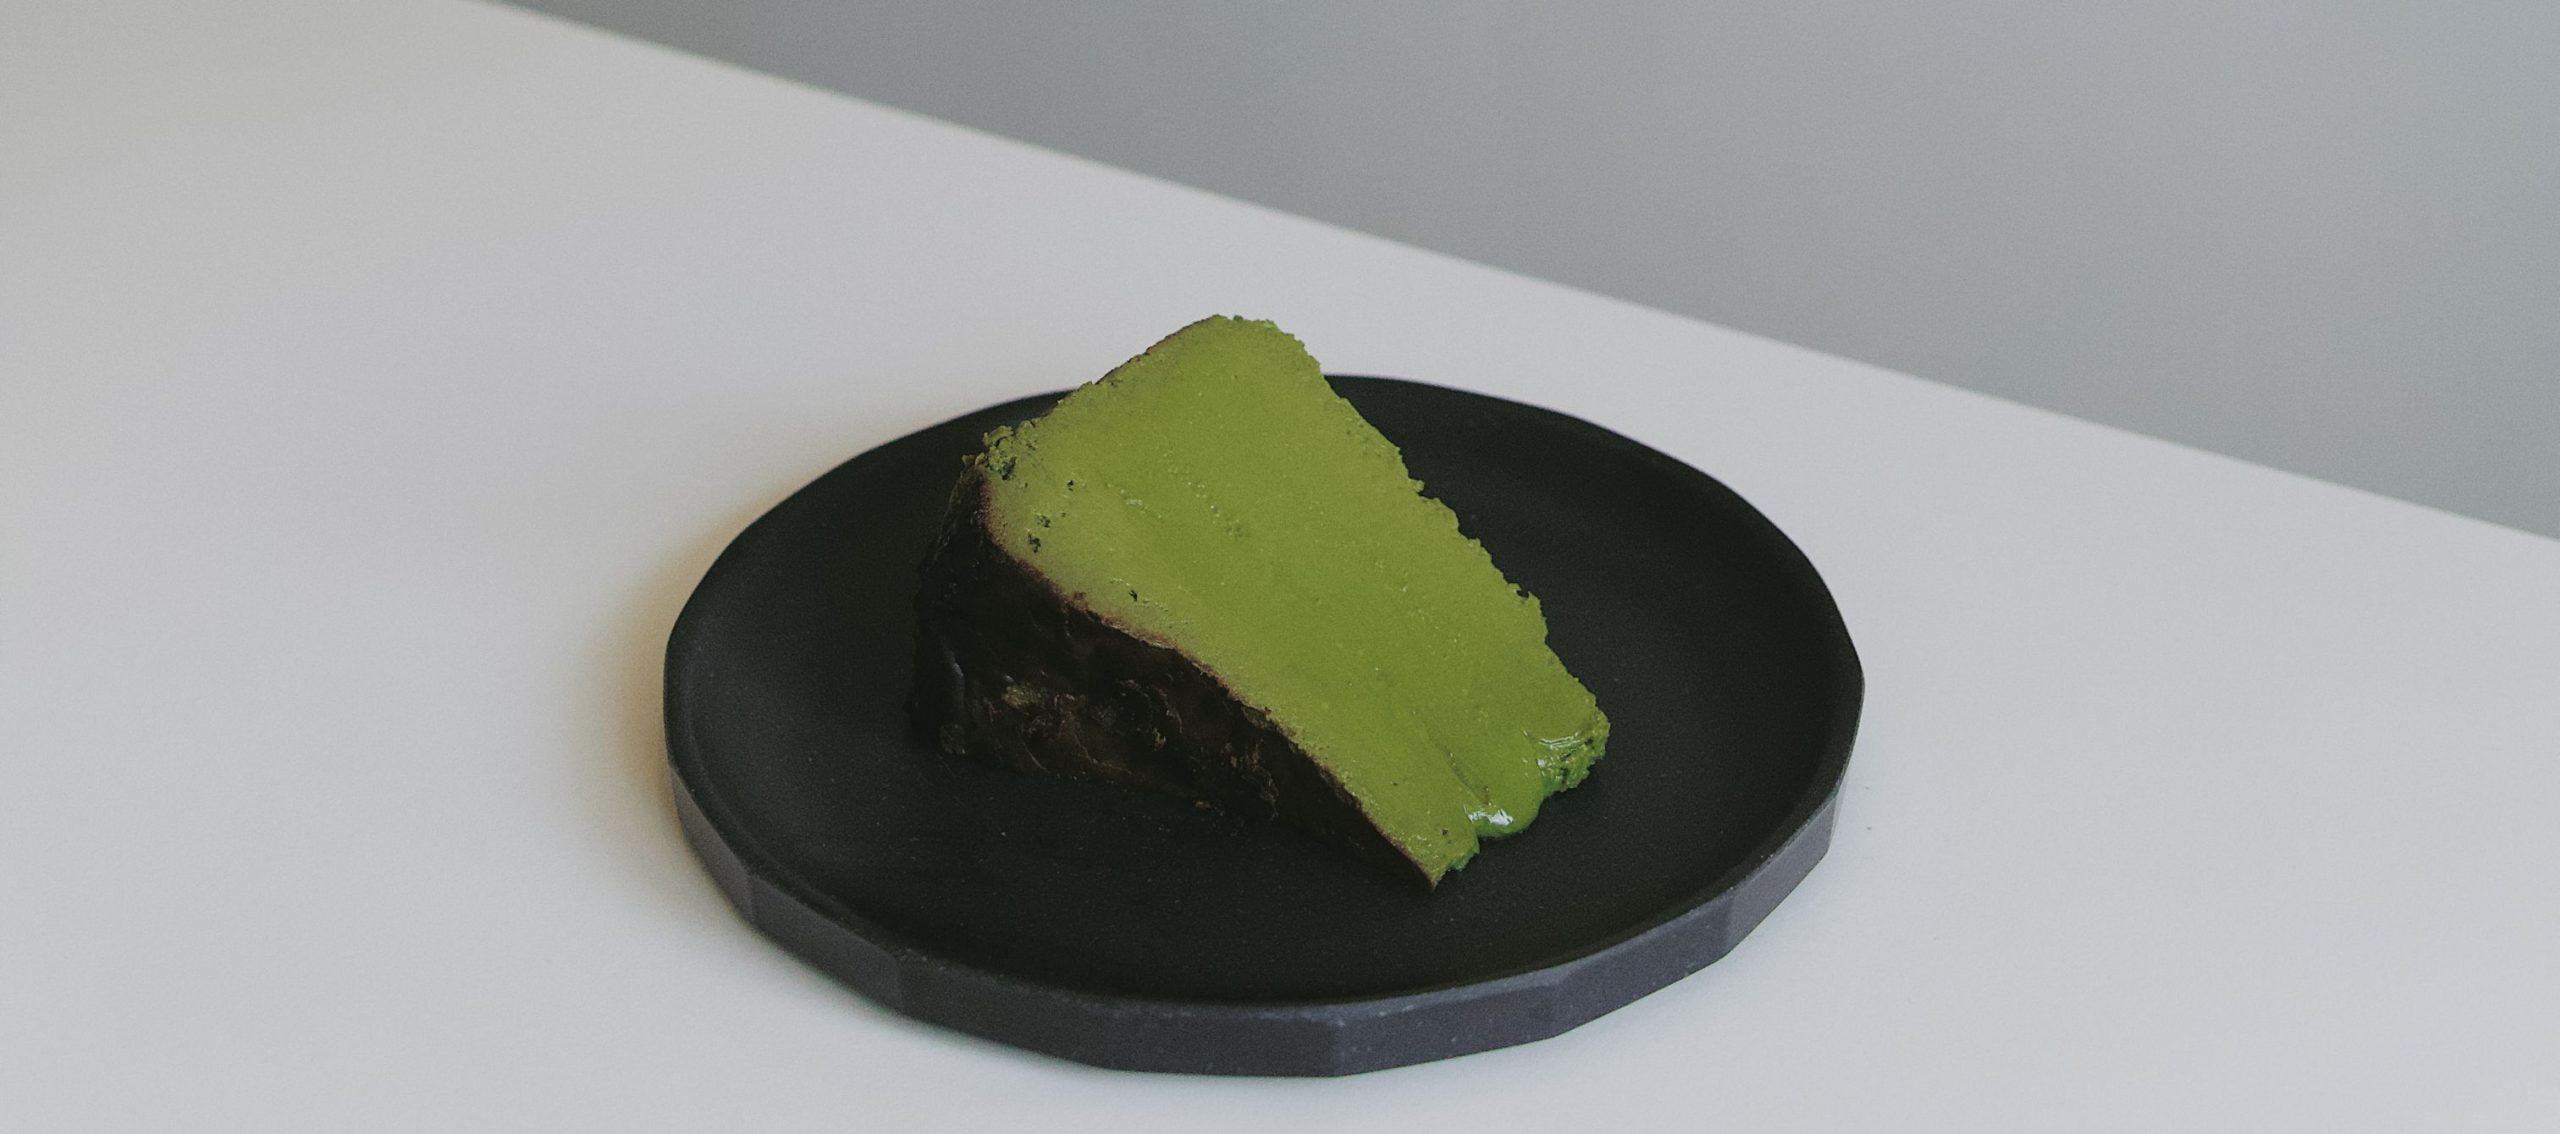 The Tokyo Restaurant Matcha Burnt Cheesecake Recipe - Niko Neko Matcha Dessert Recipes